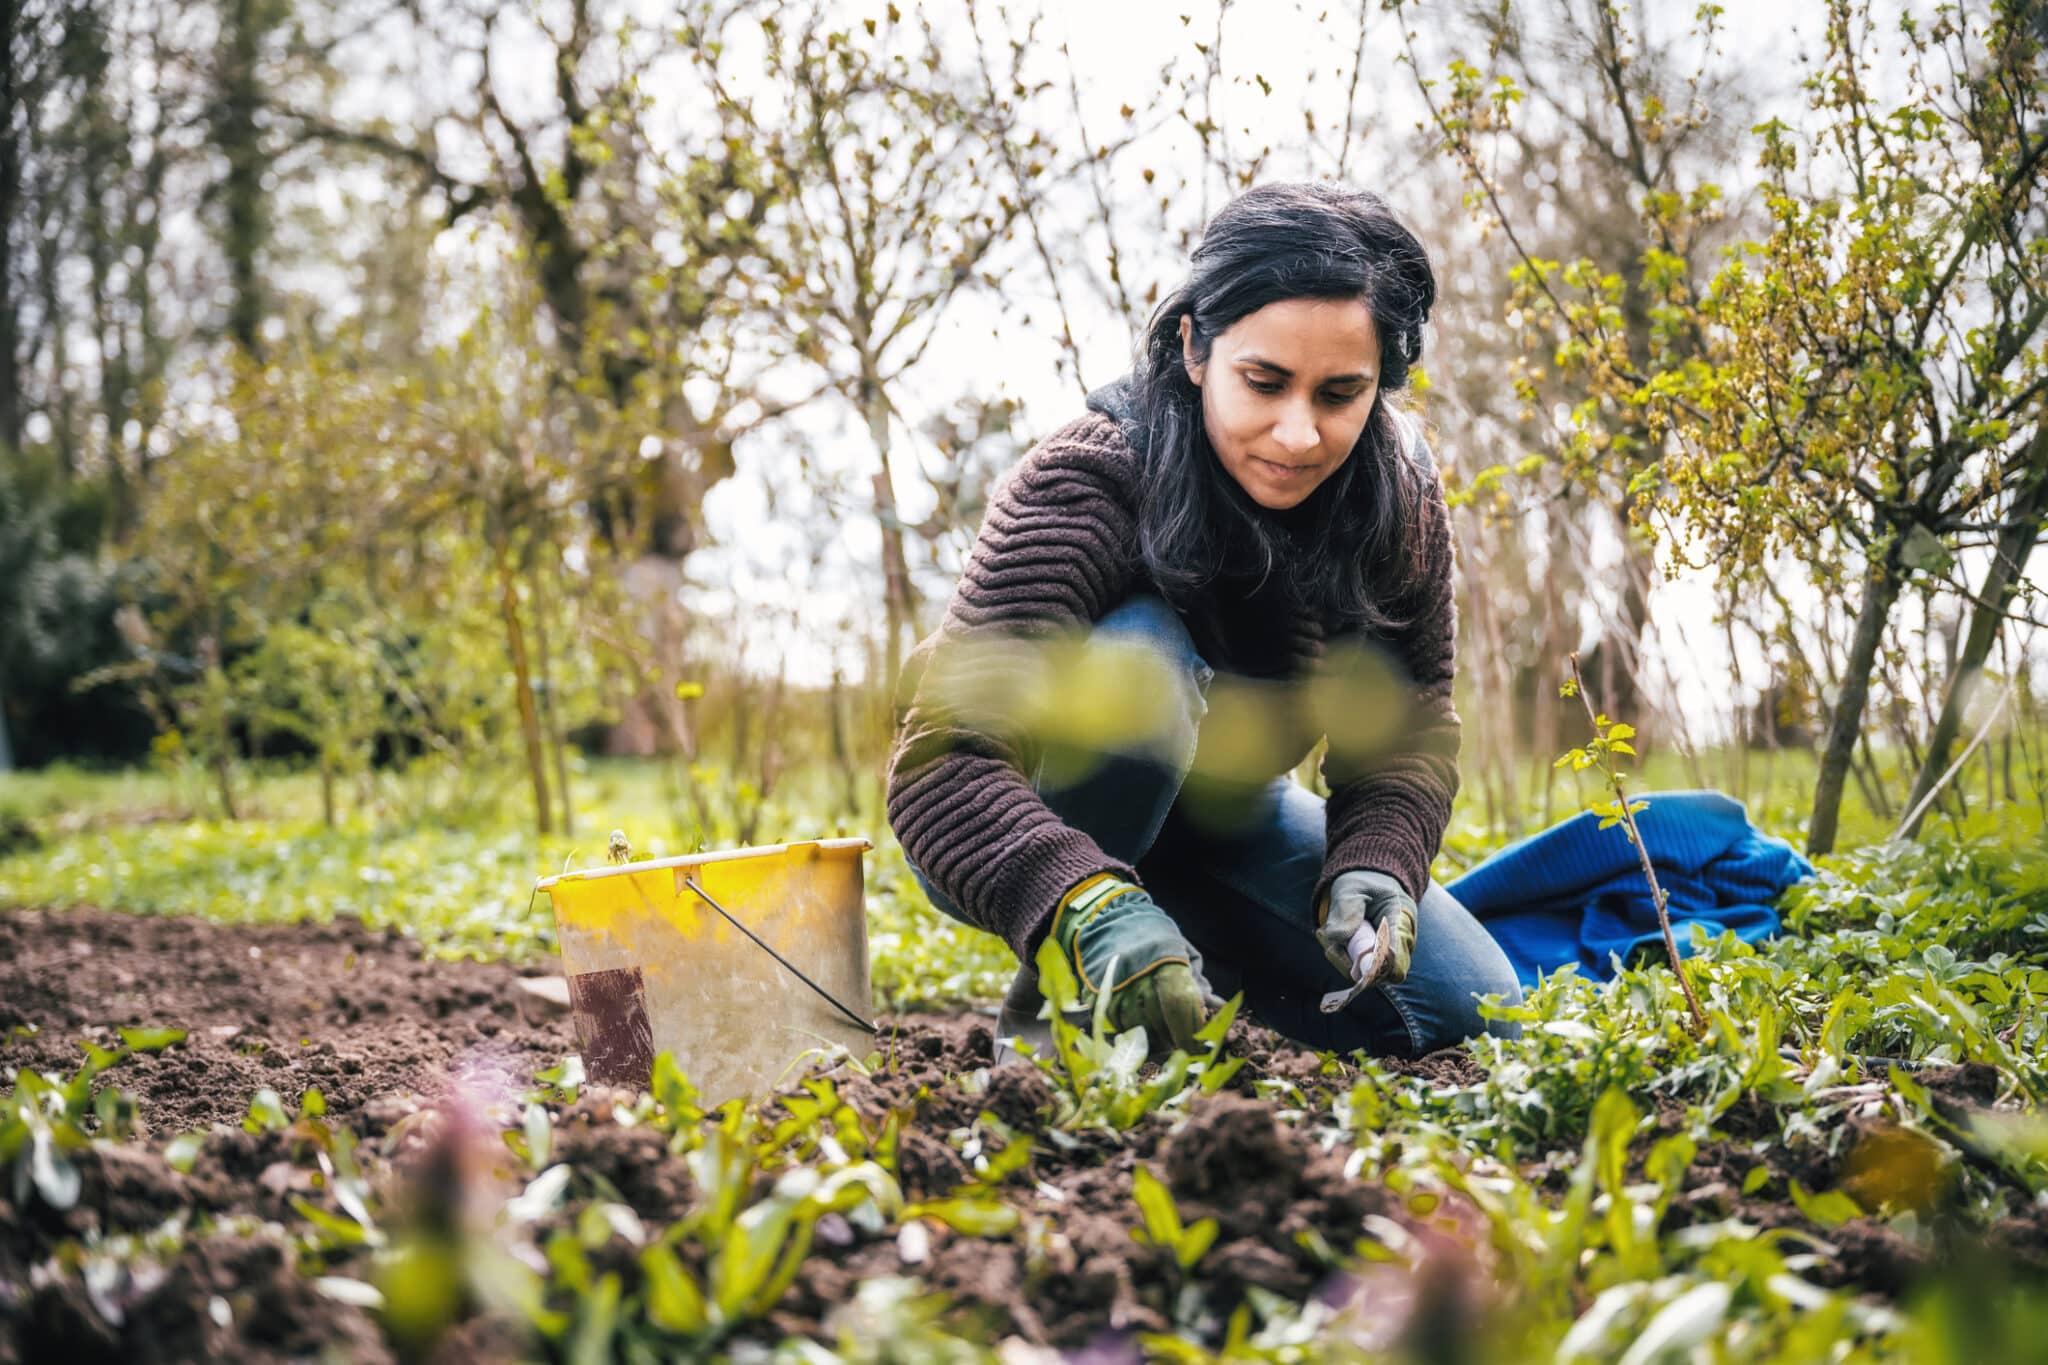 5 Ways to Prevent Injuries When Gardening This Spring